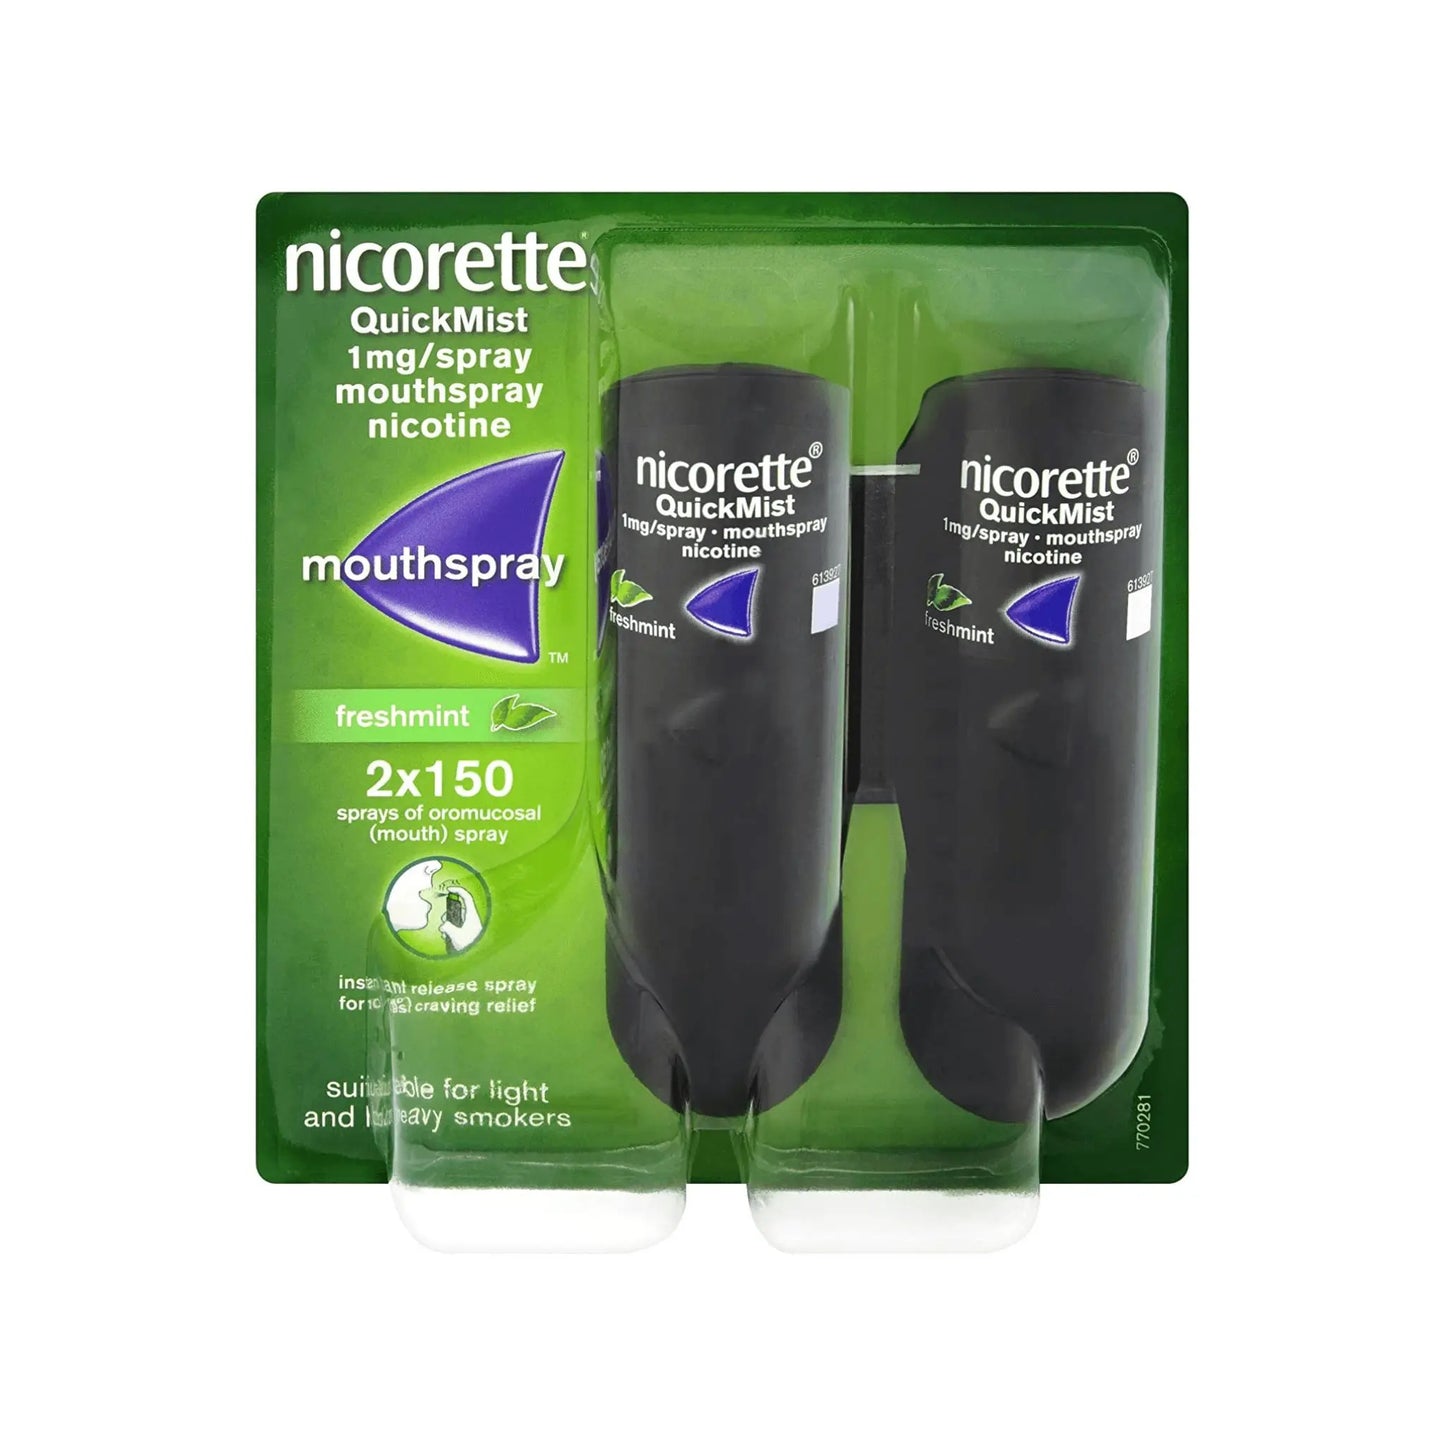 Nicorette Quickmist Mouthspray- Freshmint, 1mg, Duo